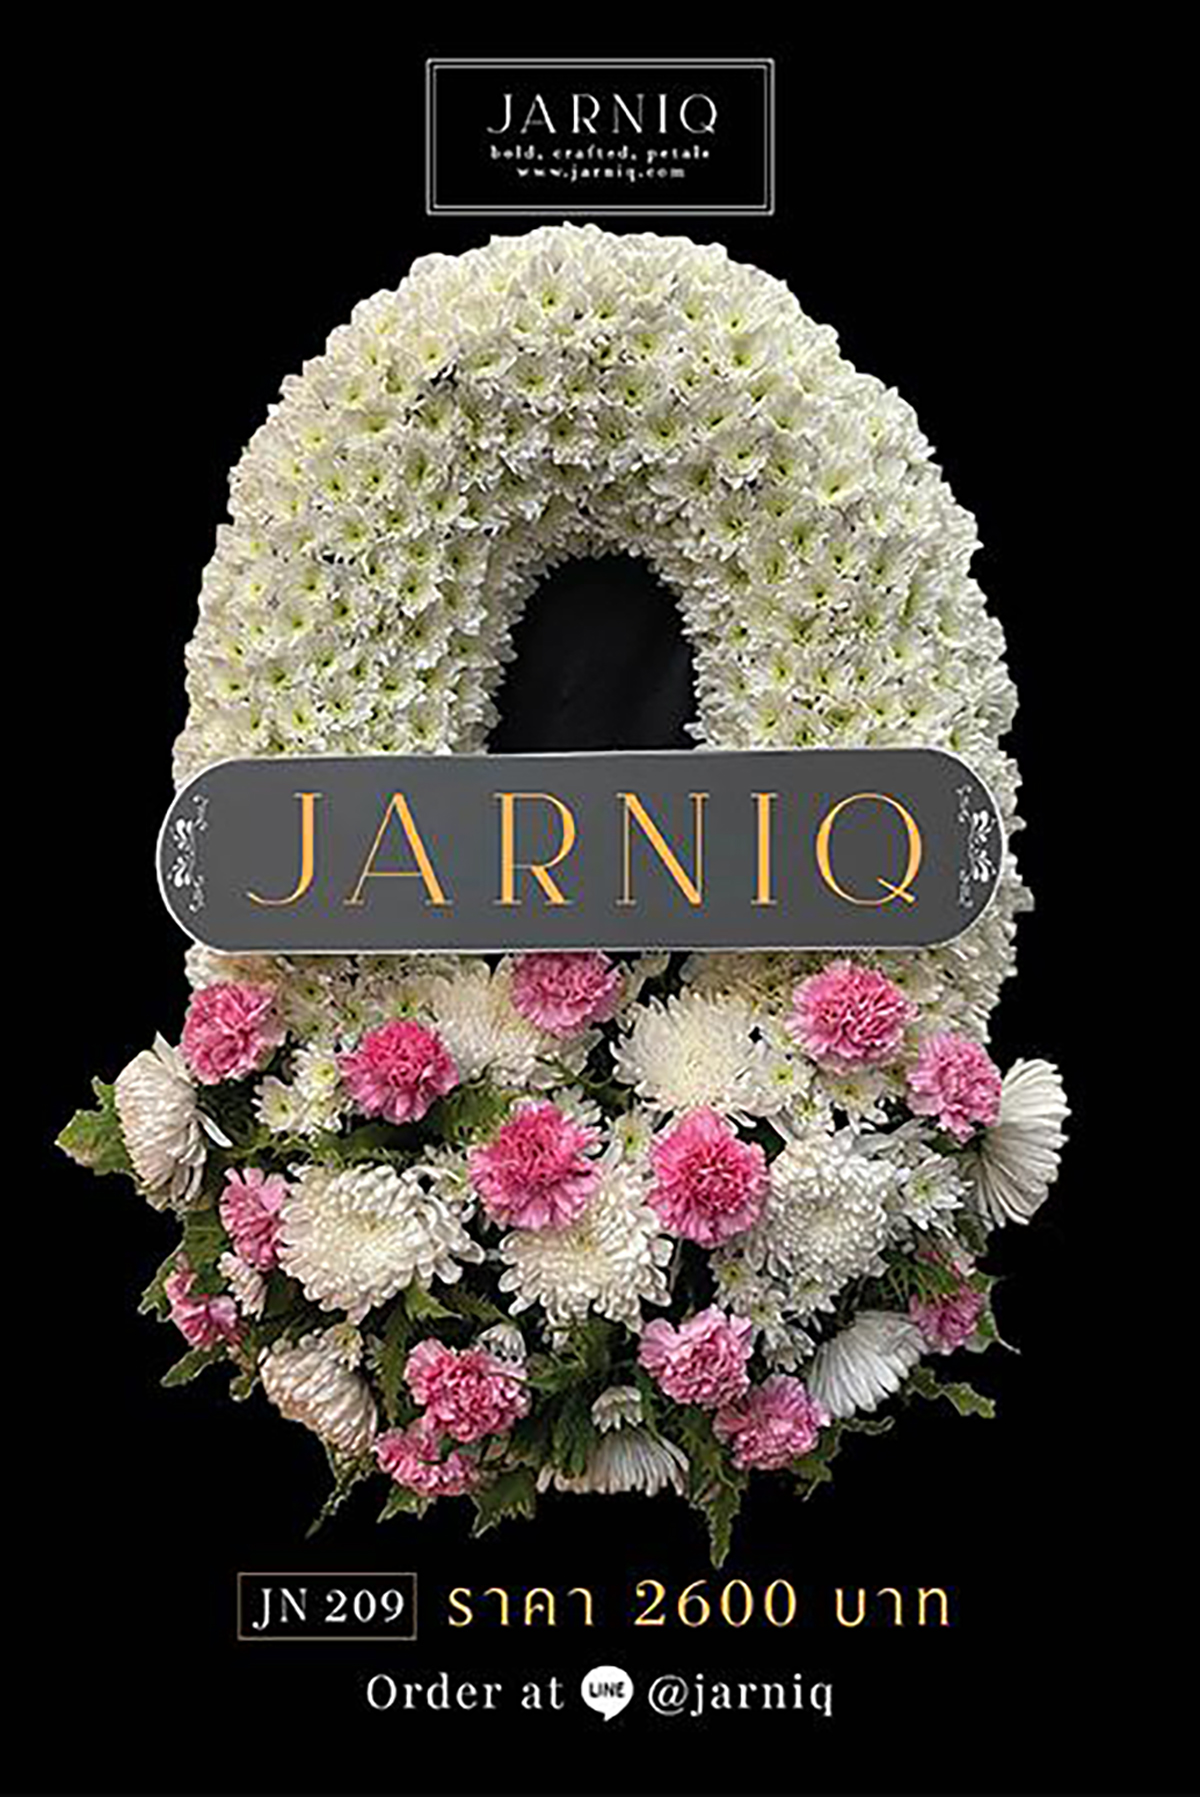 JN209 พวงหรีด พวงหรีดดอกไม้สด ส่งฟรีทั่วกรุงเทพมหานคร